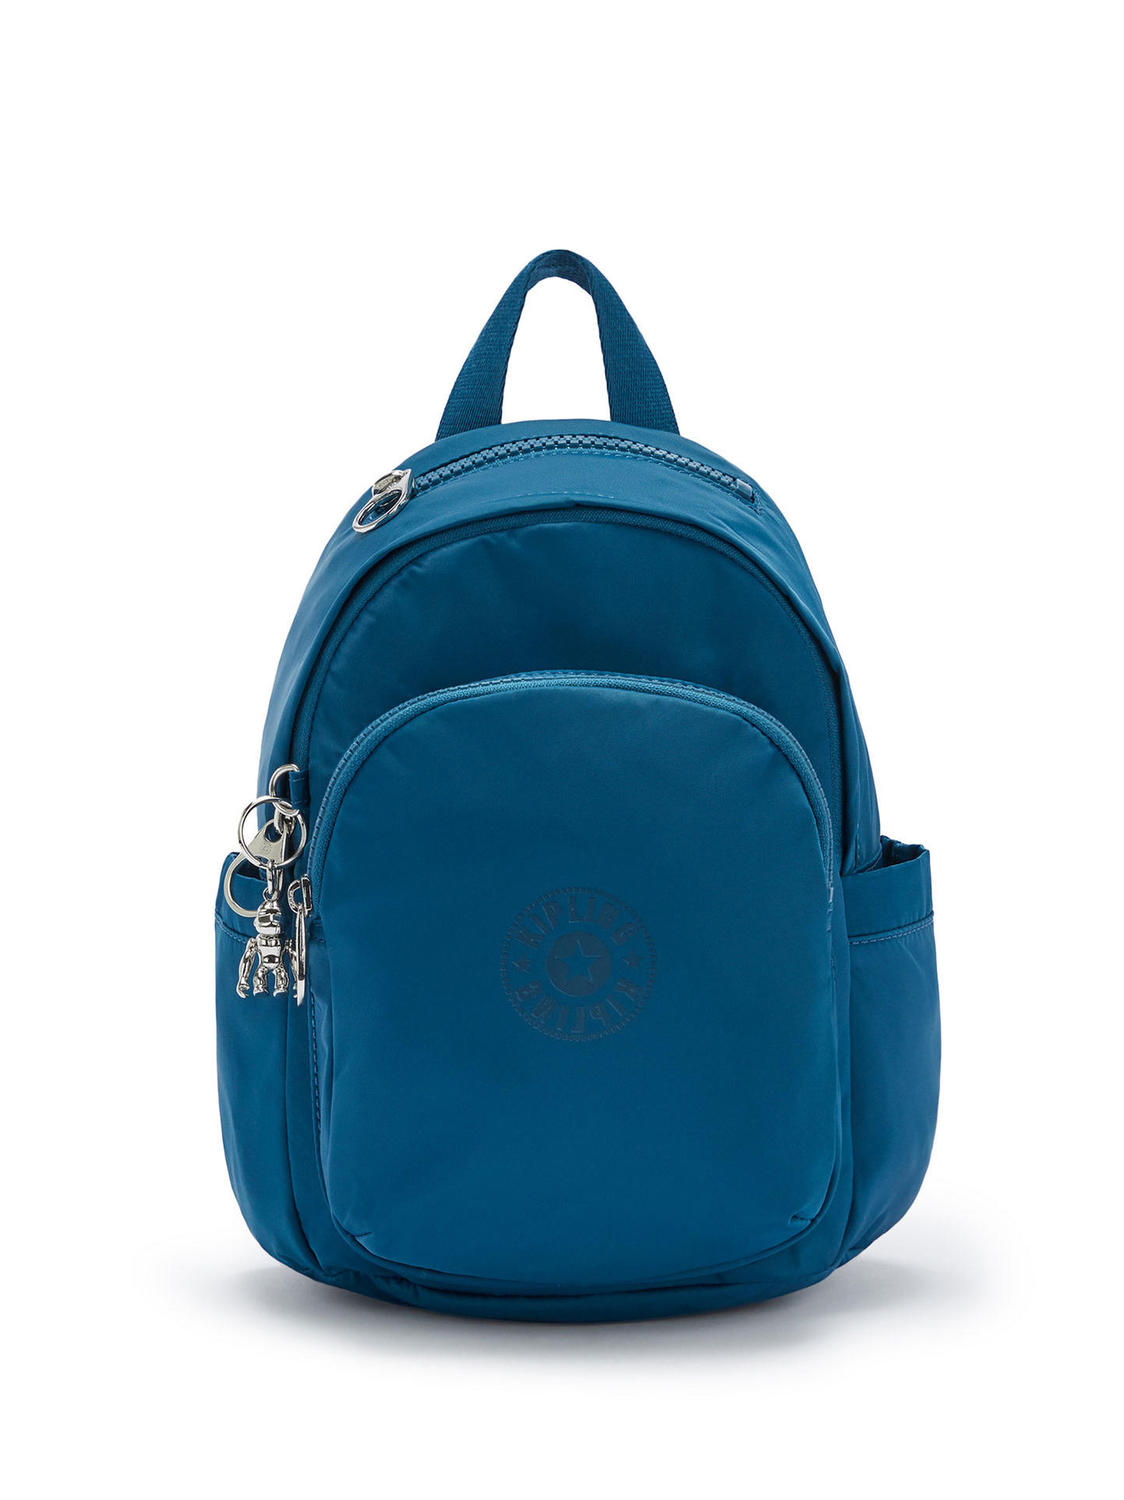 Mochila Kipling azul Mini Backpack BARATA, Bolsos Baratos Online